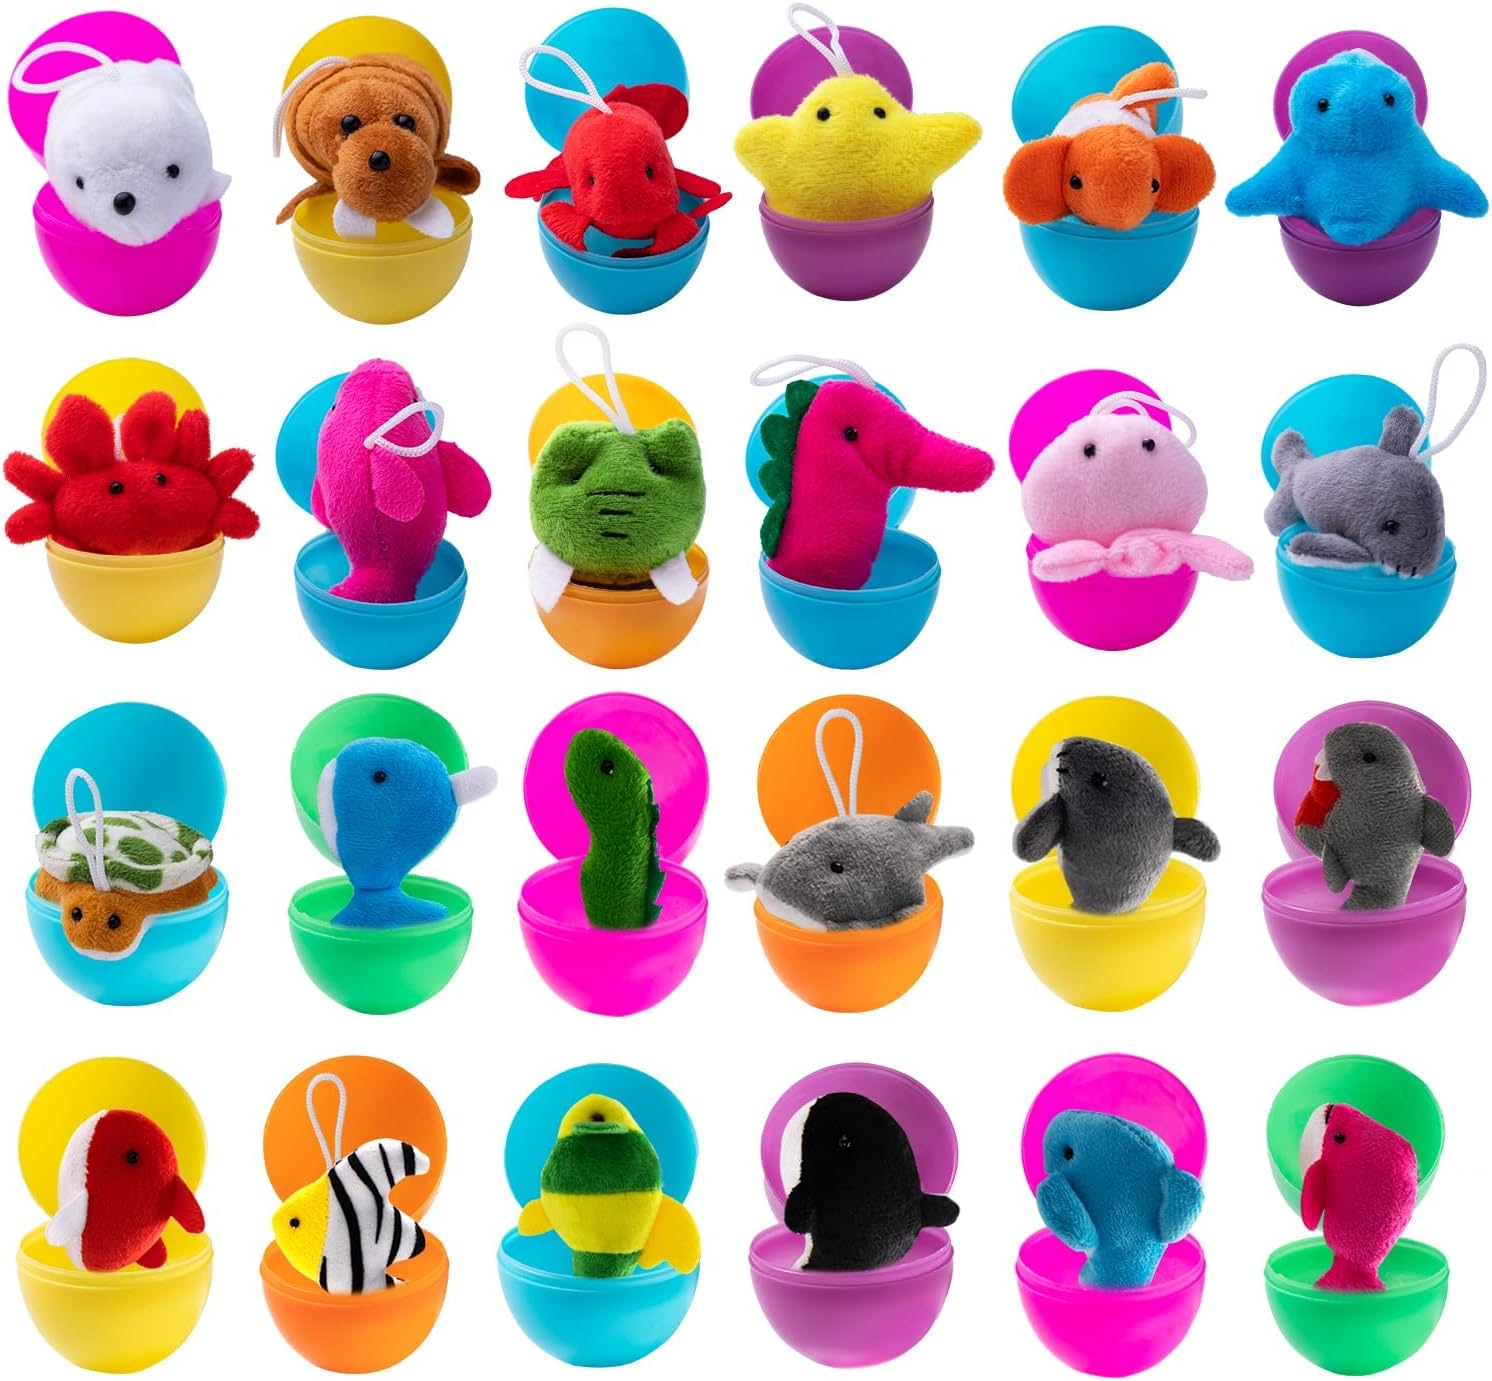 JOYIN 24 Pcs Prefilled Easter Eggs with Sea Animal Plush Toy Set, Mini Ocean Toys Creatures Stuffed Keychain for Kids Hunts,